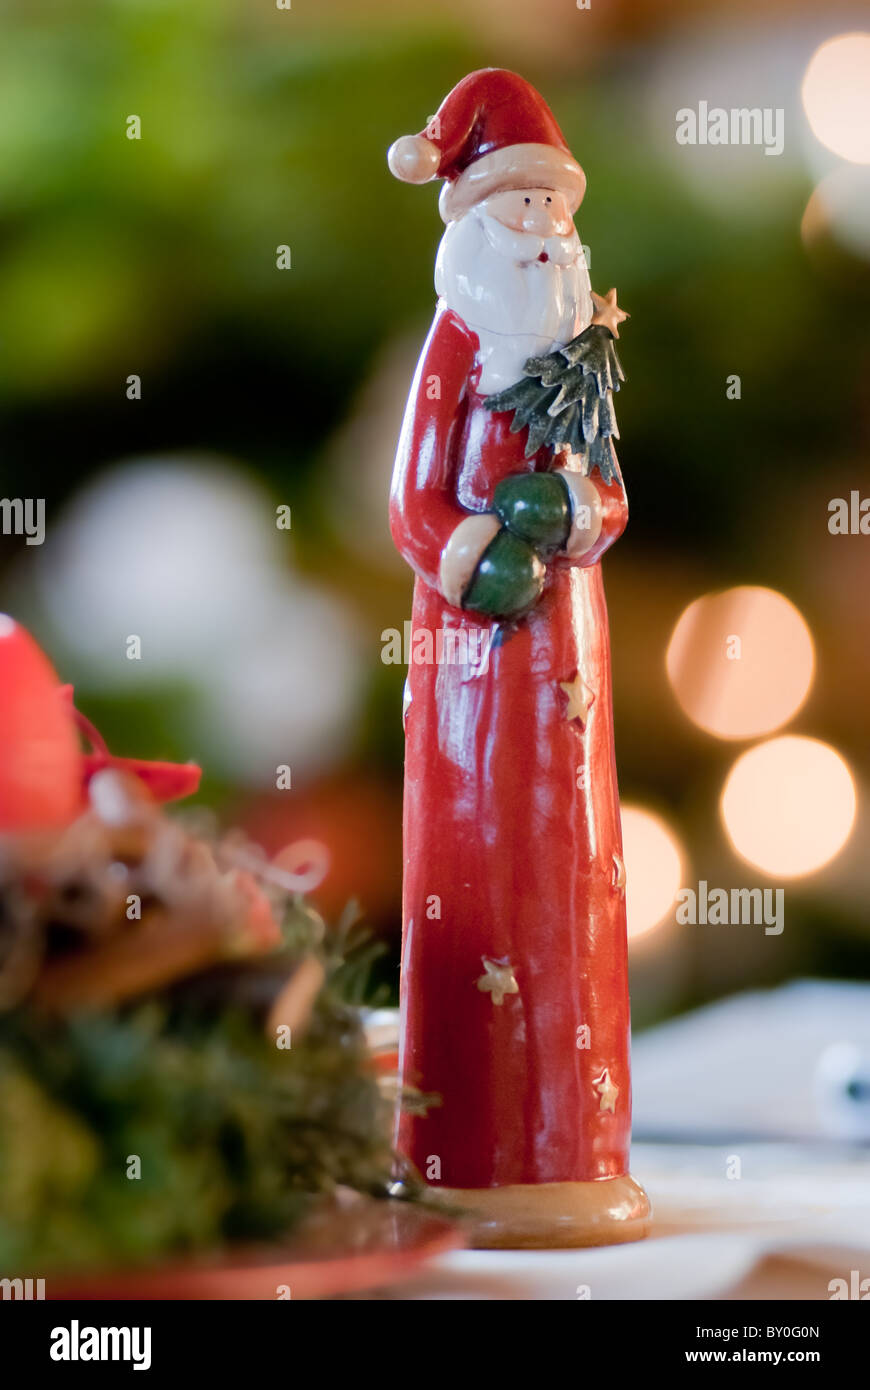 Closeup of Santa Claus figure Stock Photo